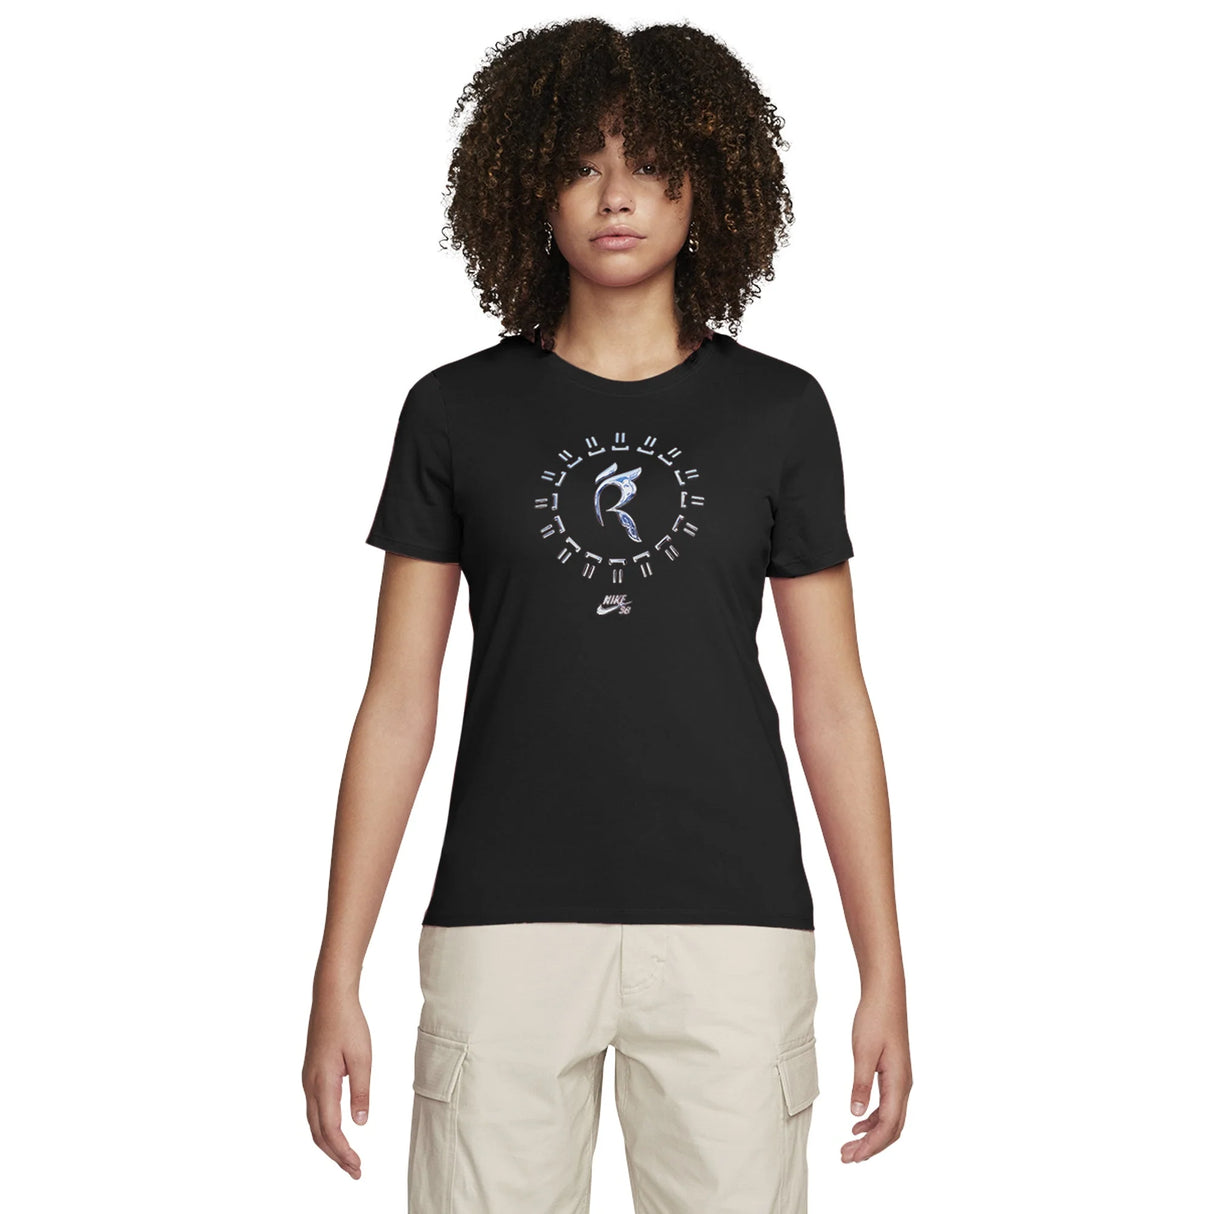 Nike SB x Rayssa Leal Womens Black S/s Shirt